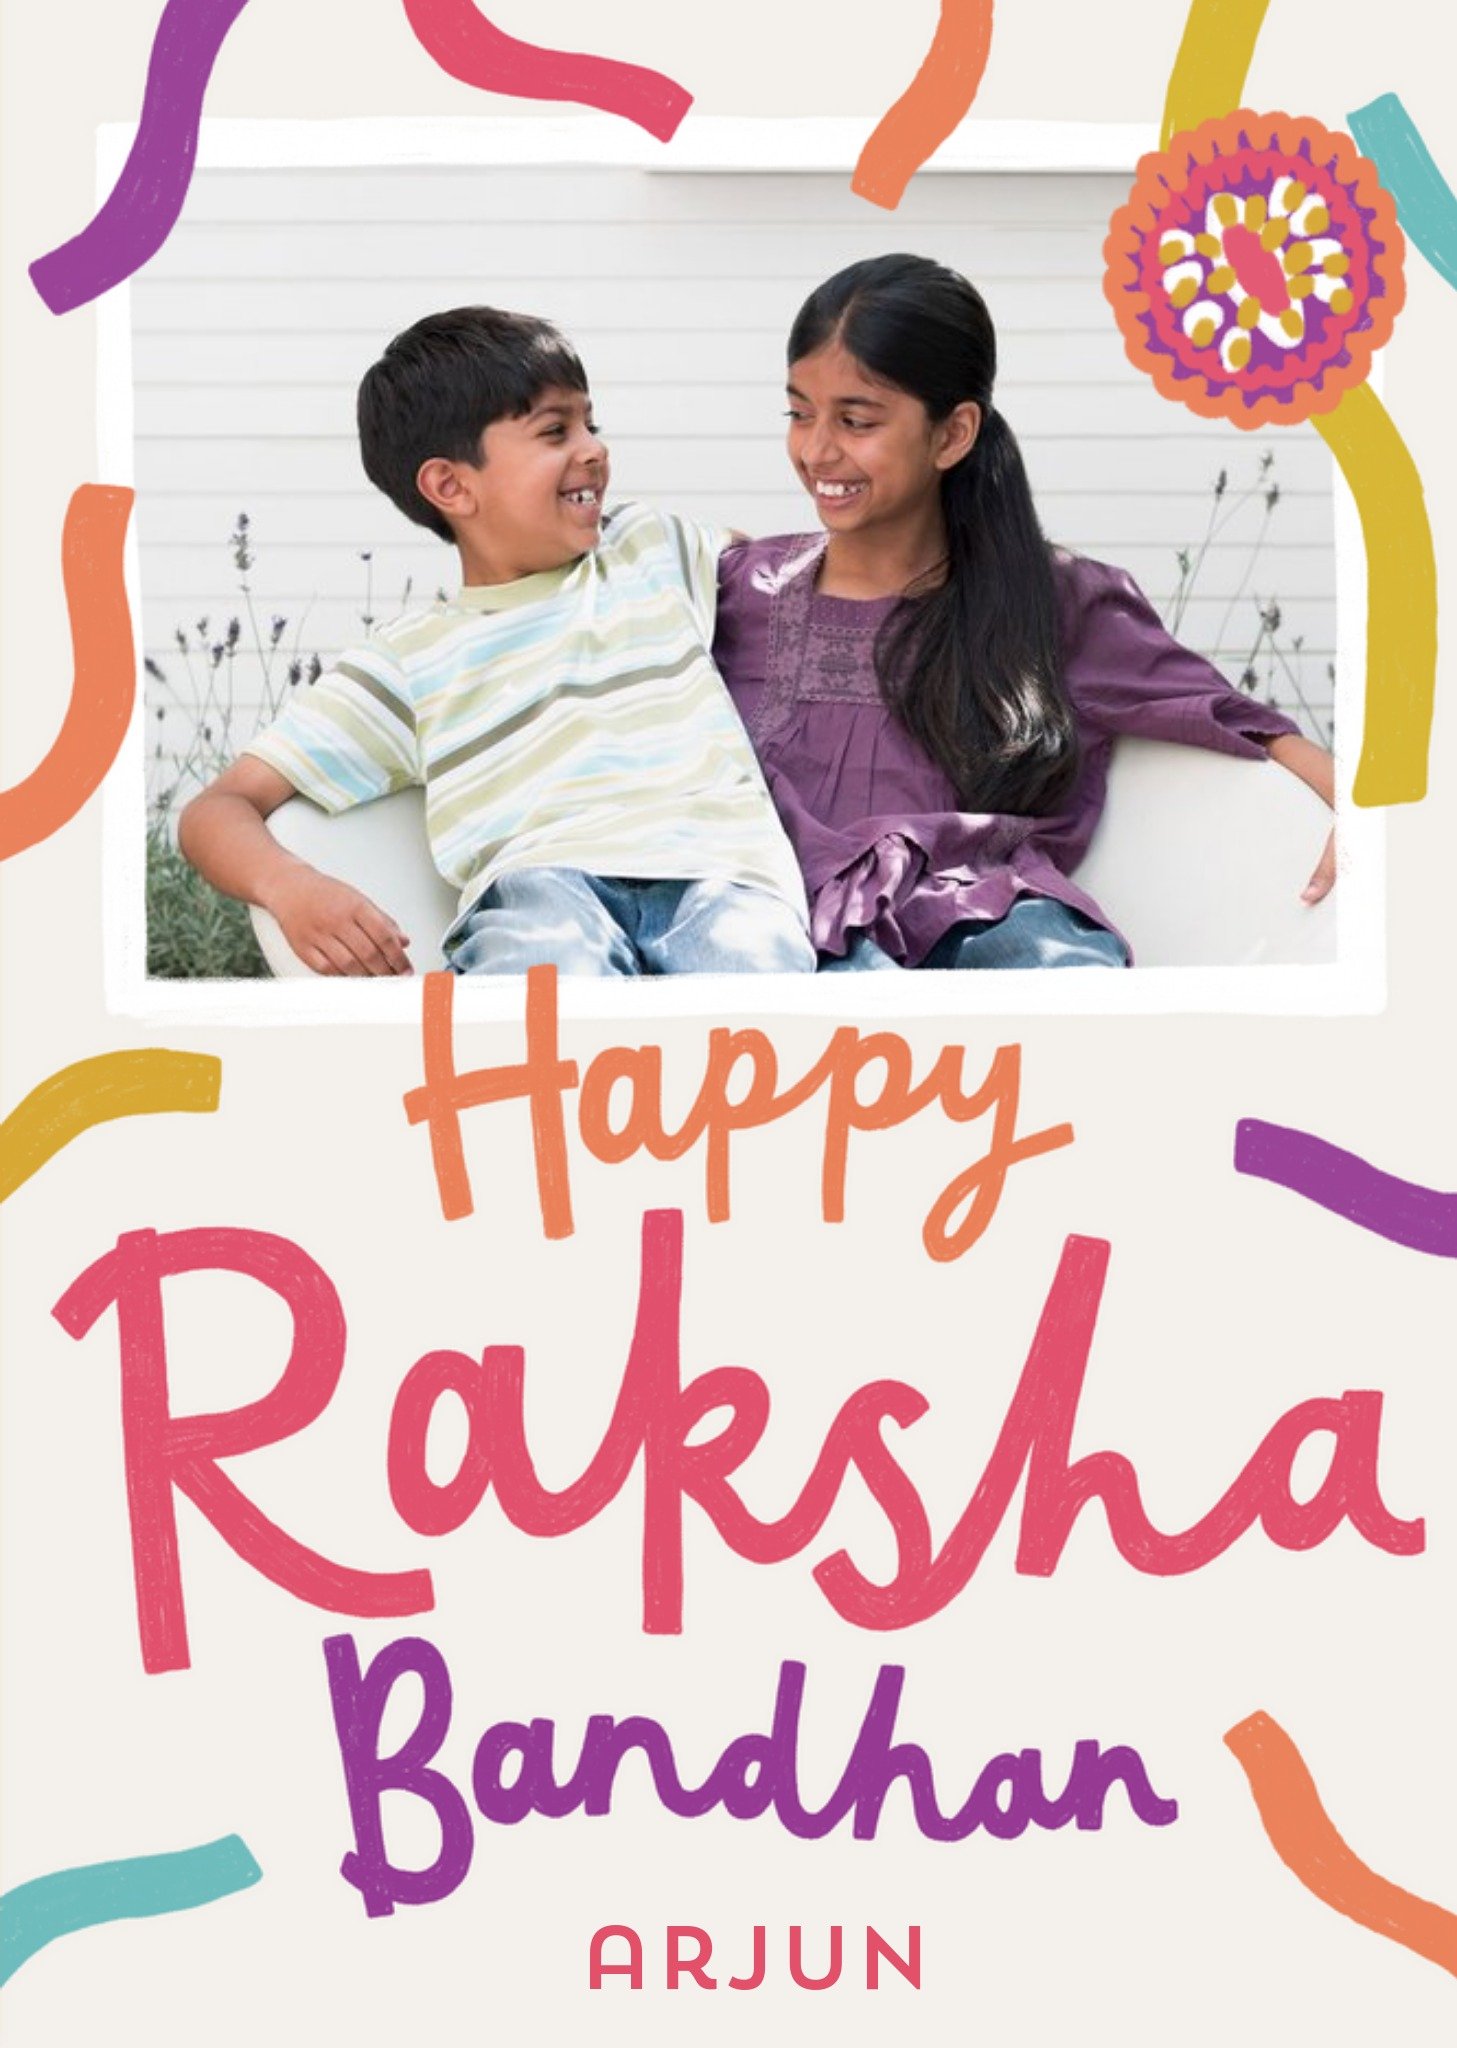 Moonpig Fun Bright Happy Raksha Bandhan Photo Upload Card Ecard